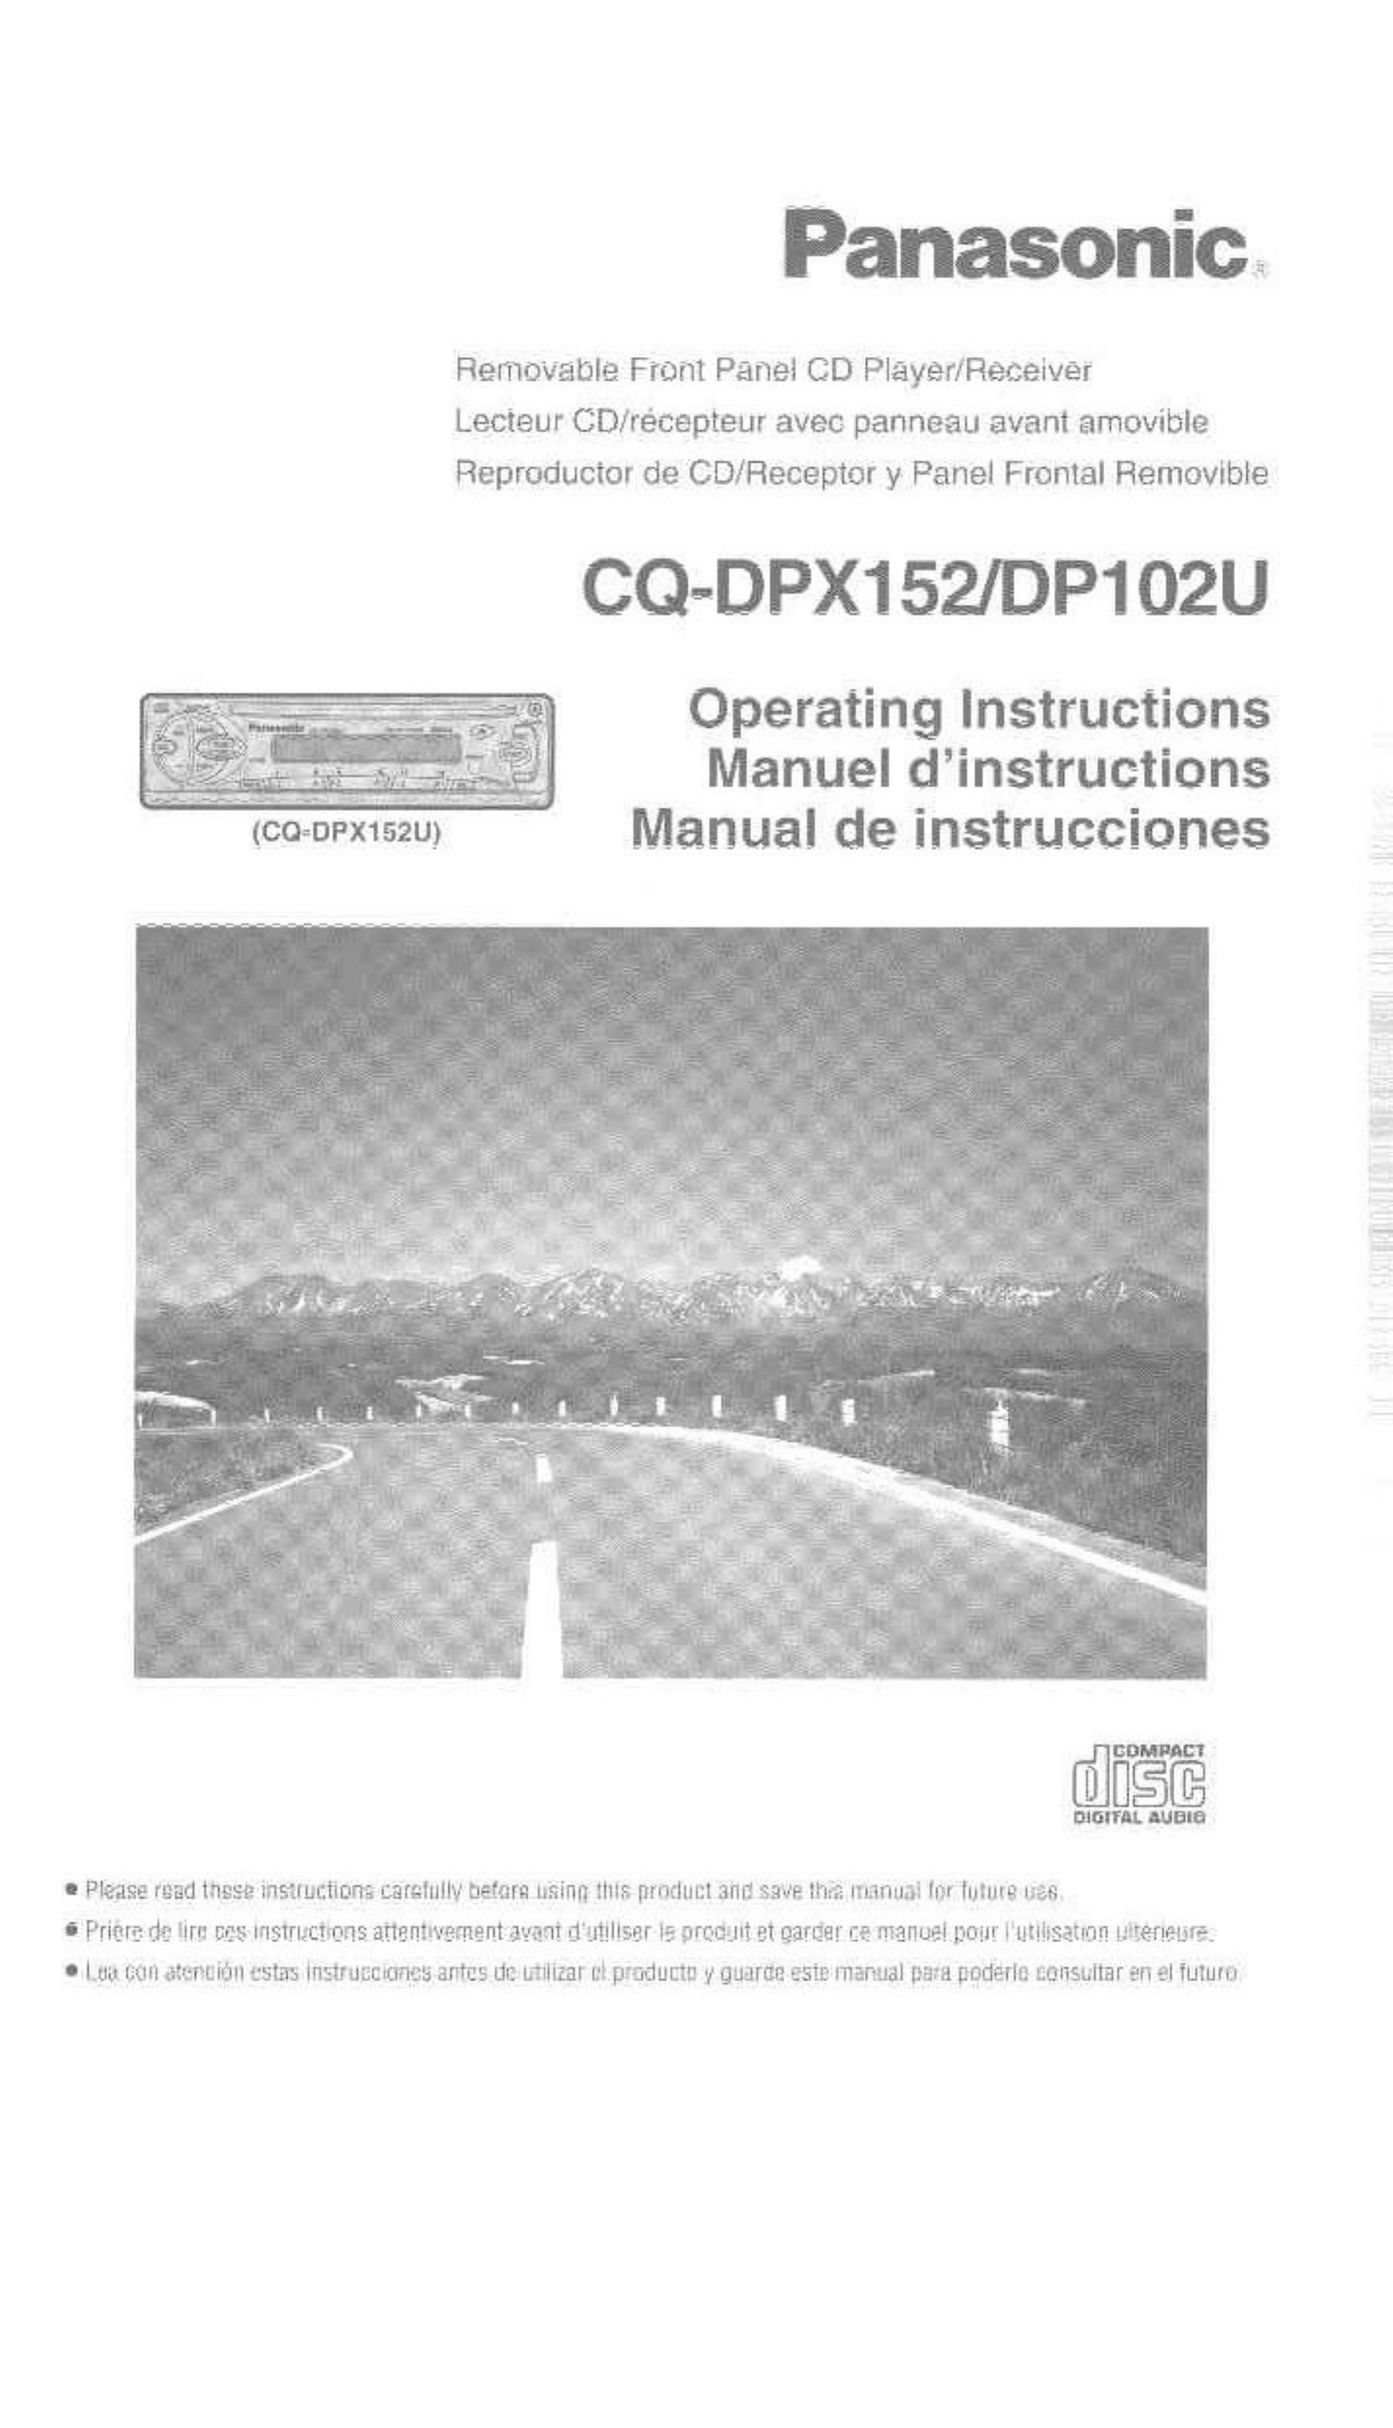 Panasonic CQ-DPX152 CD Player User Manual